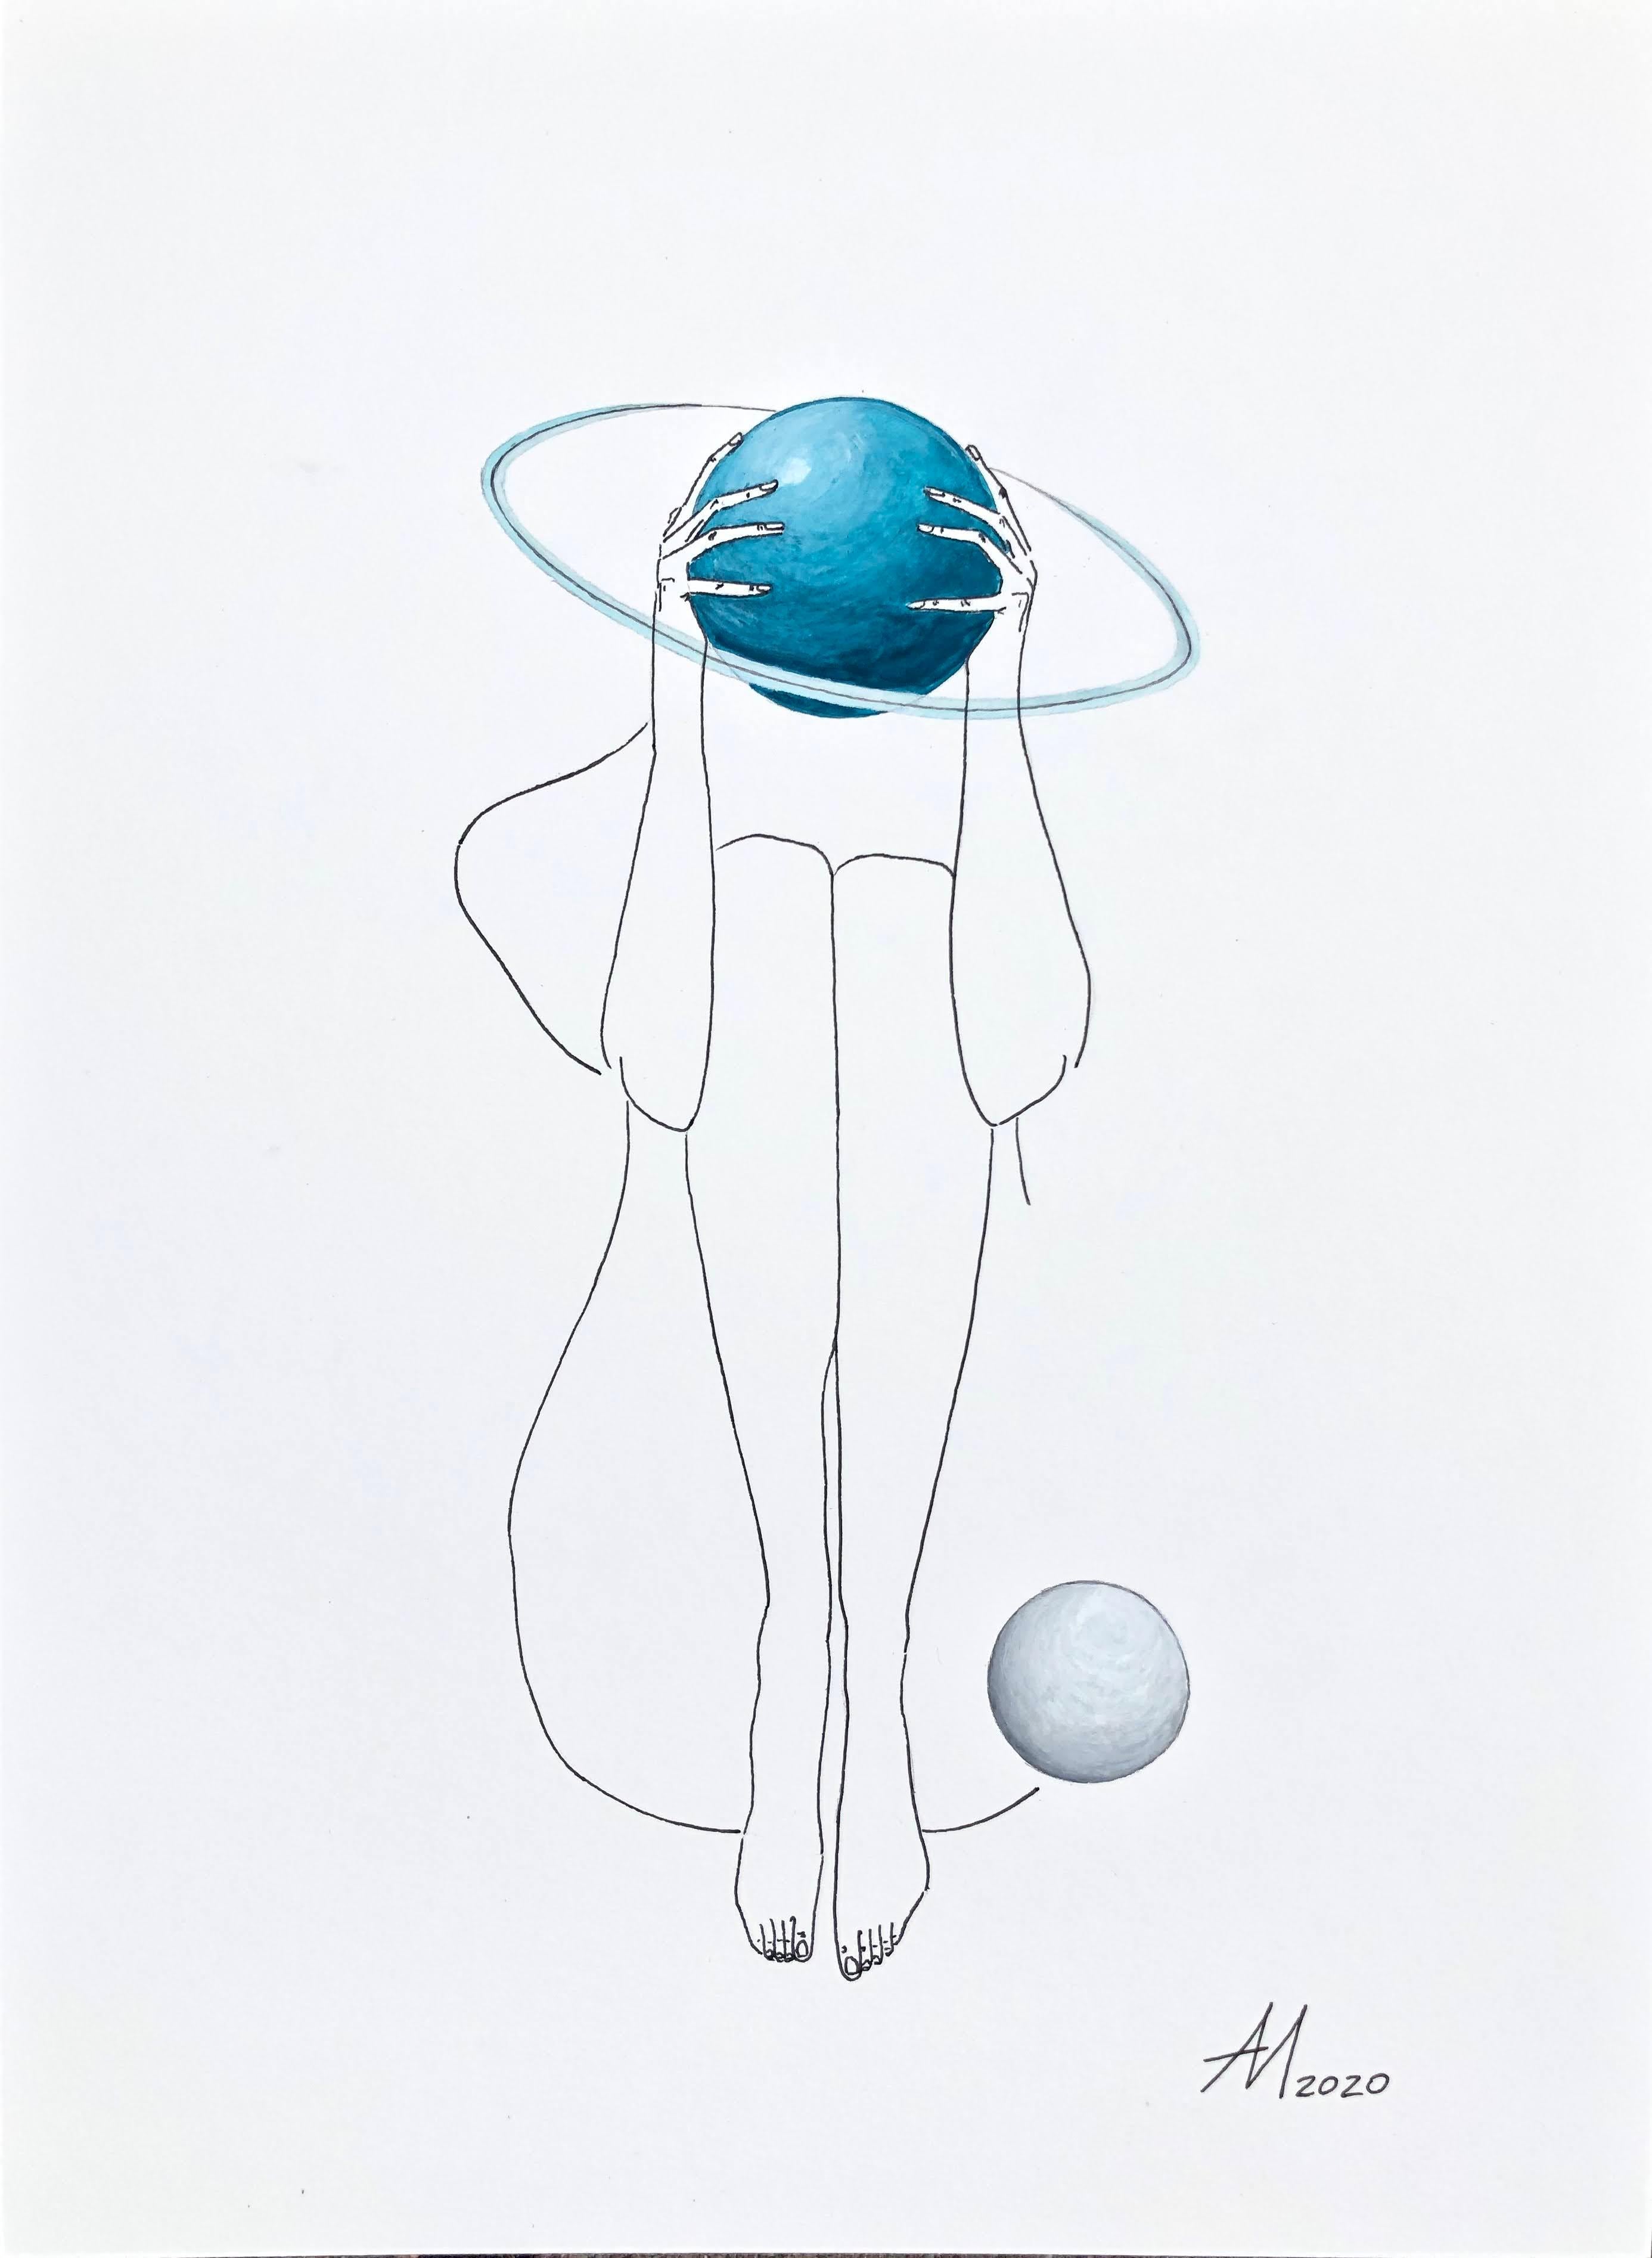 Mila Akopova Figurative Art - Uranus (turquoise blue planet) - line drawing woman figure with circle